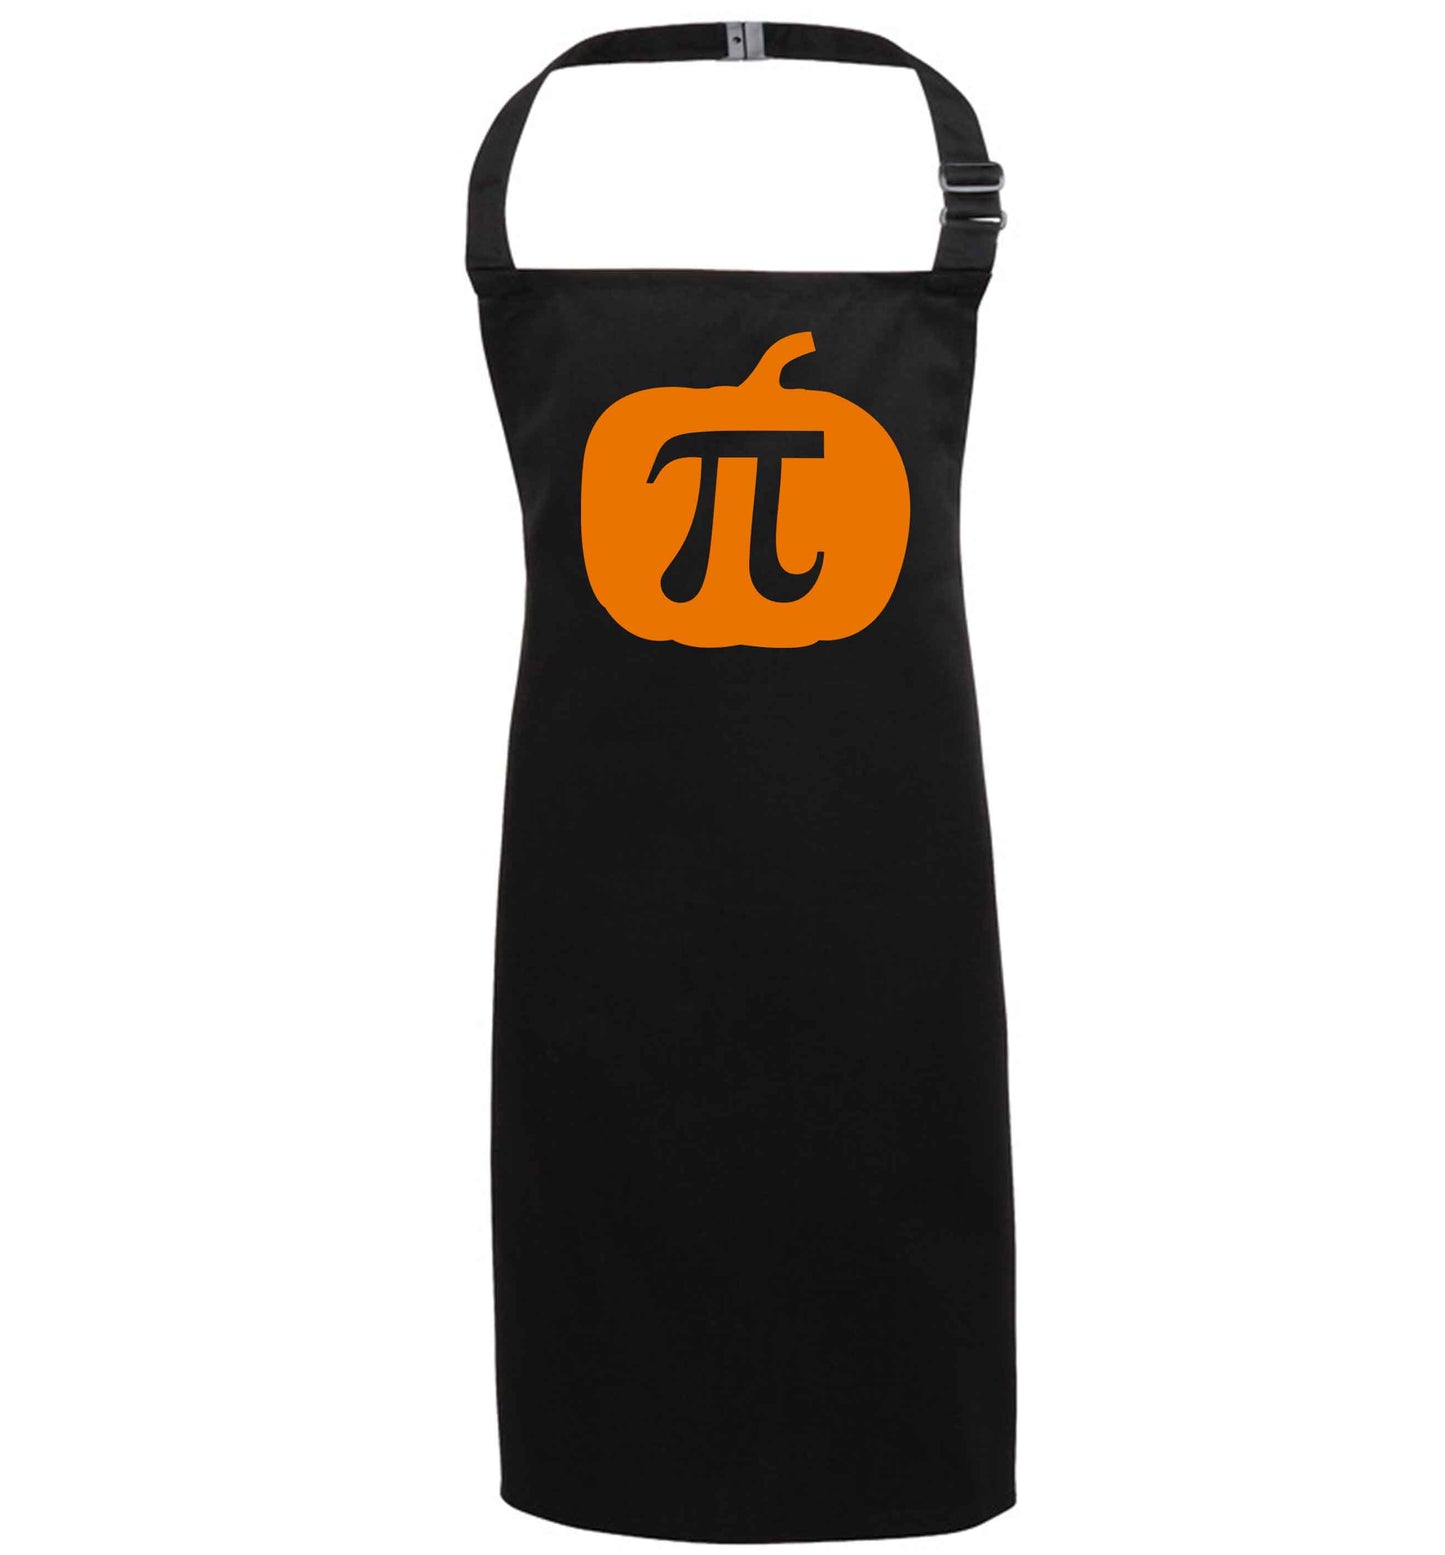 Pumpkin Pie black apron 7-10 years